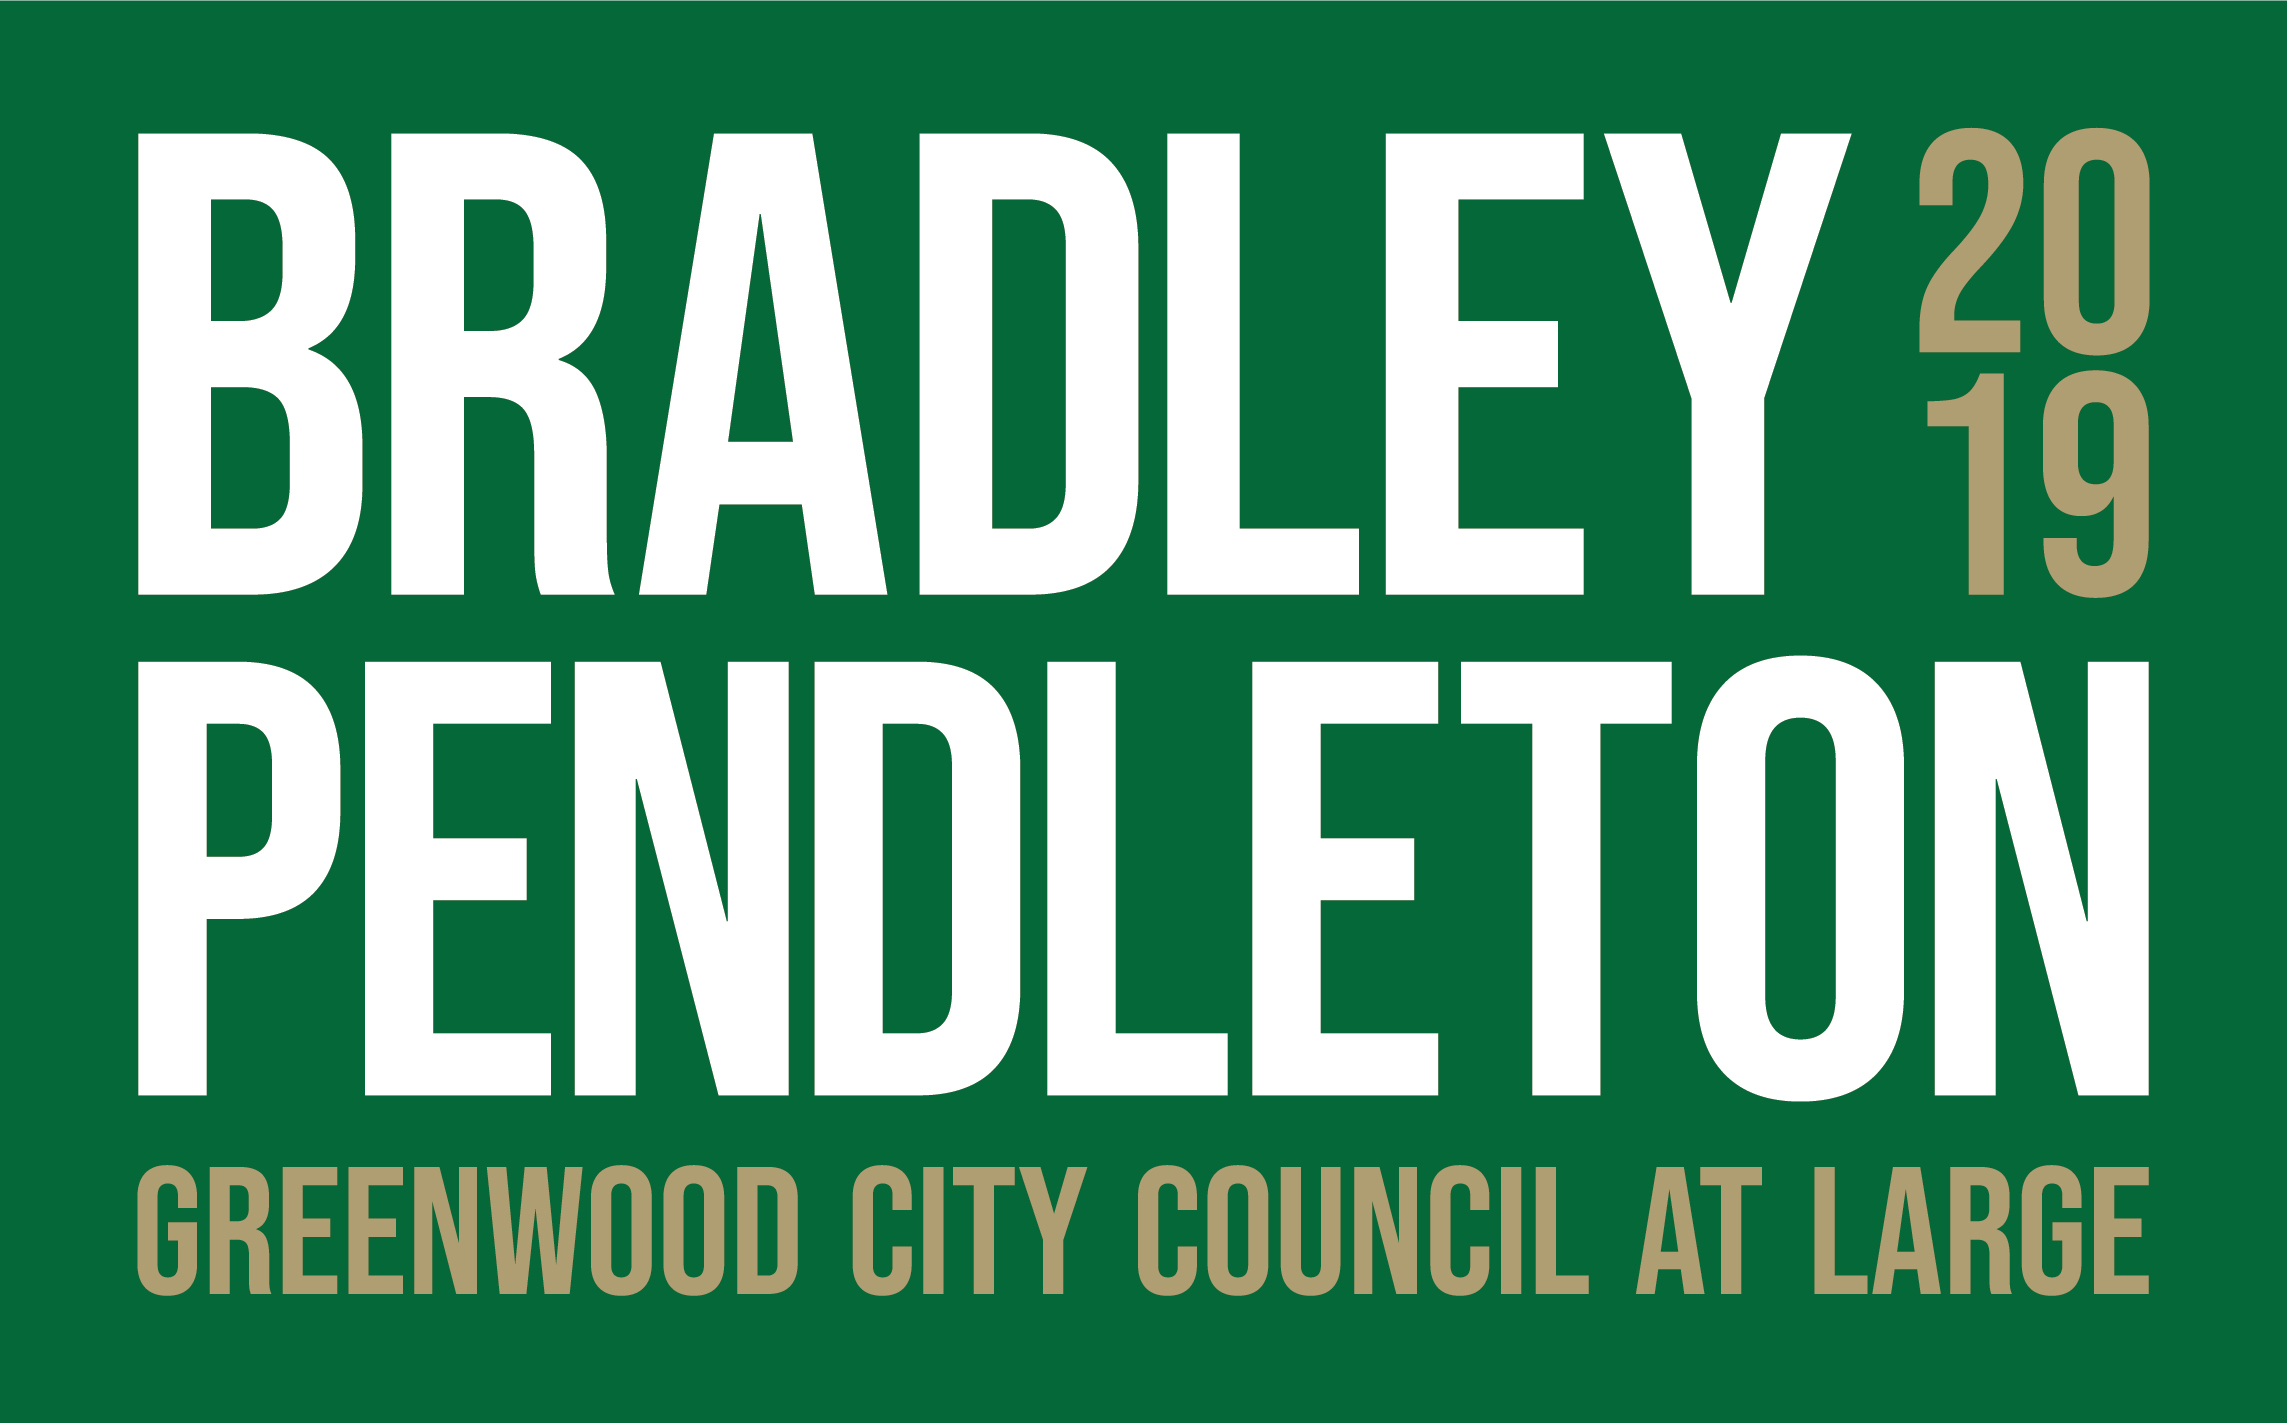 Bradley Pendleton for Greenwood City Council logo